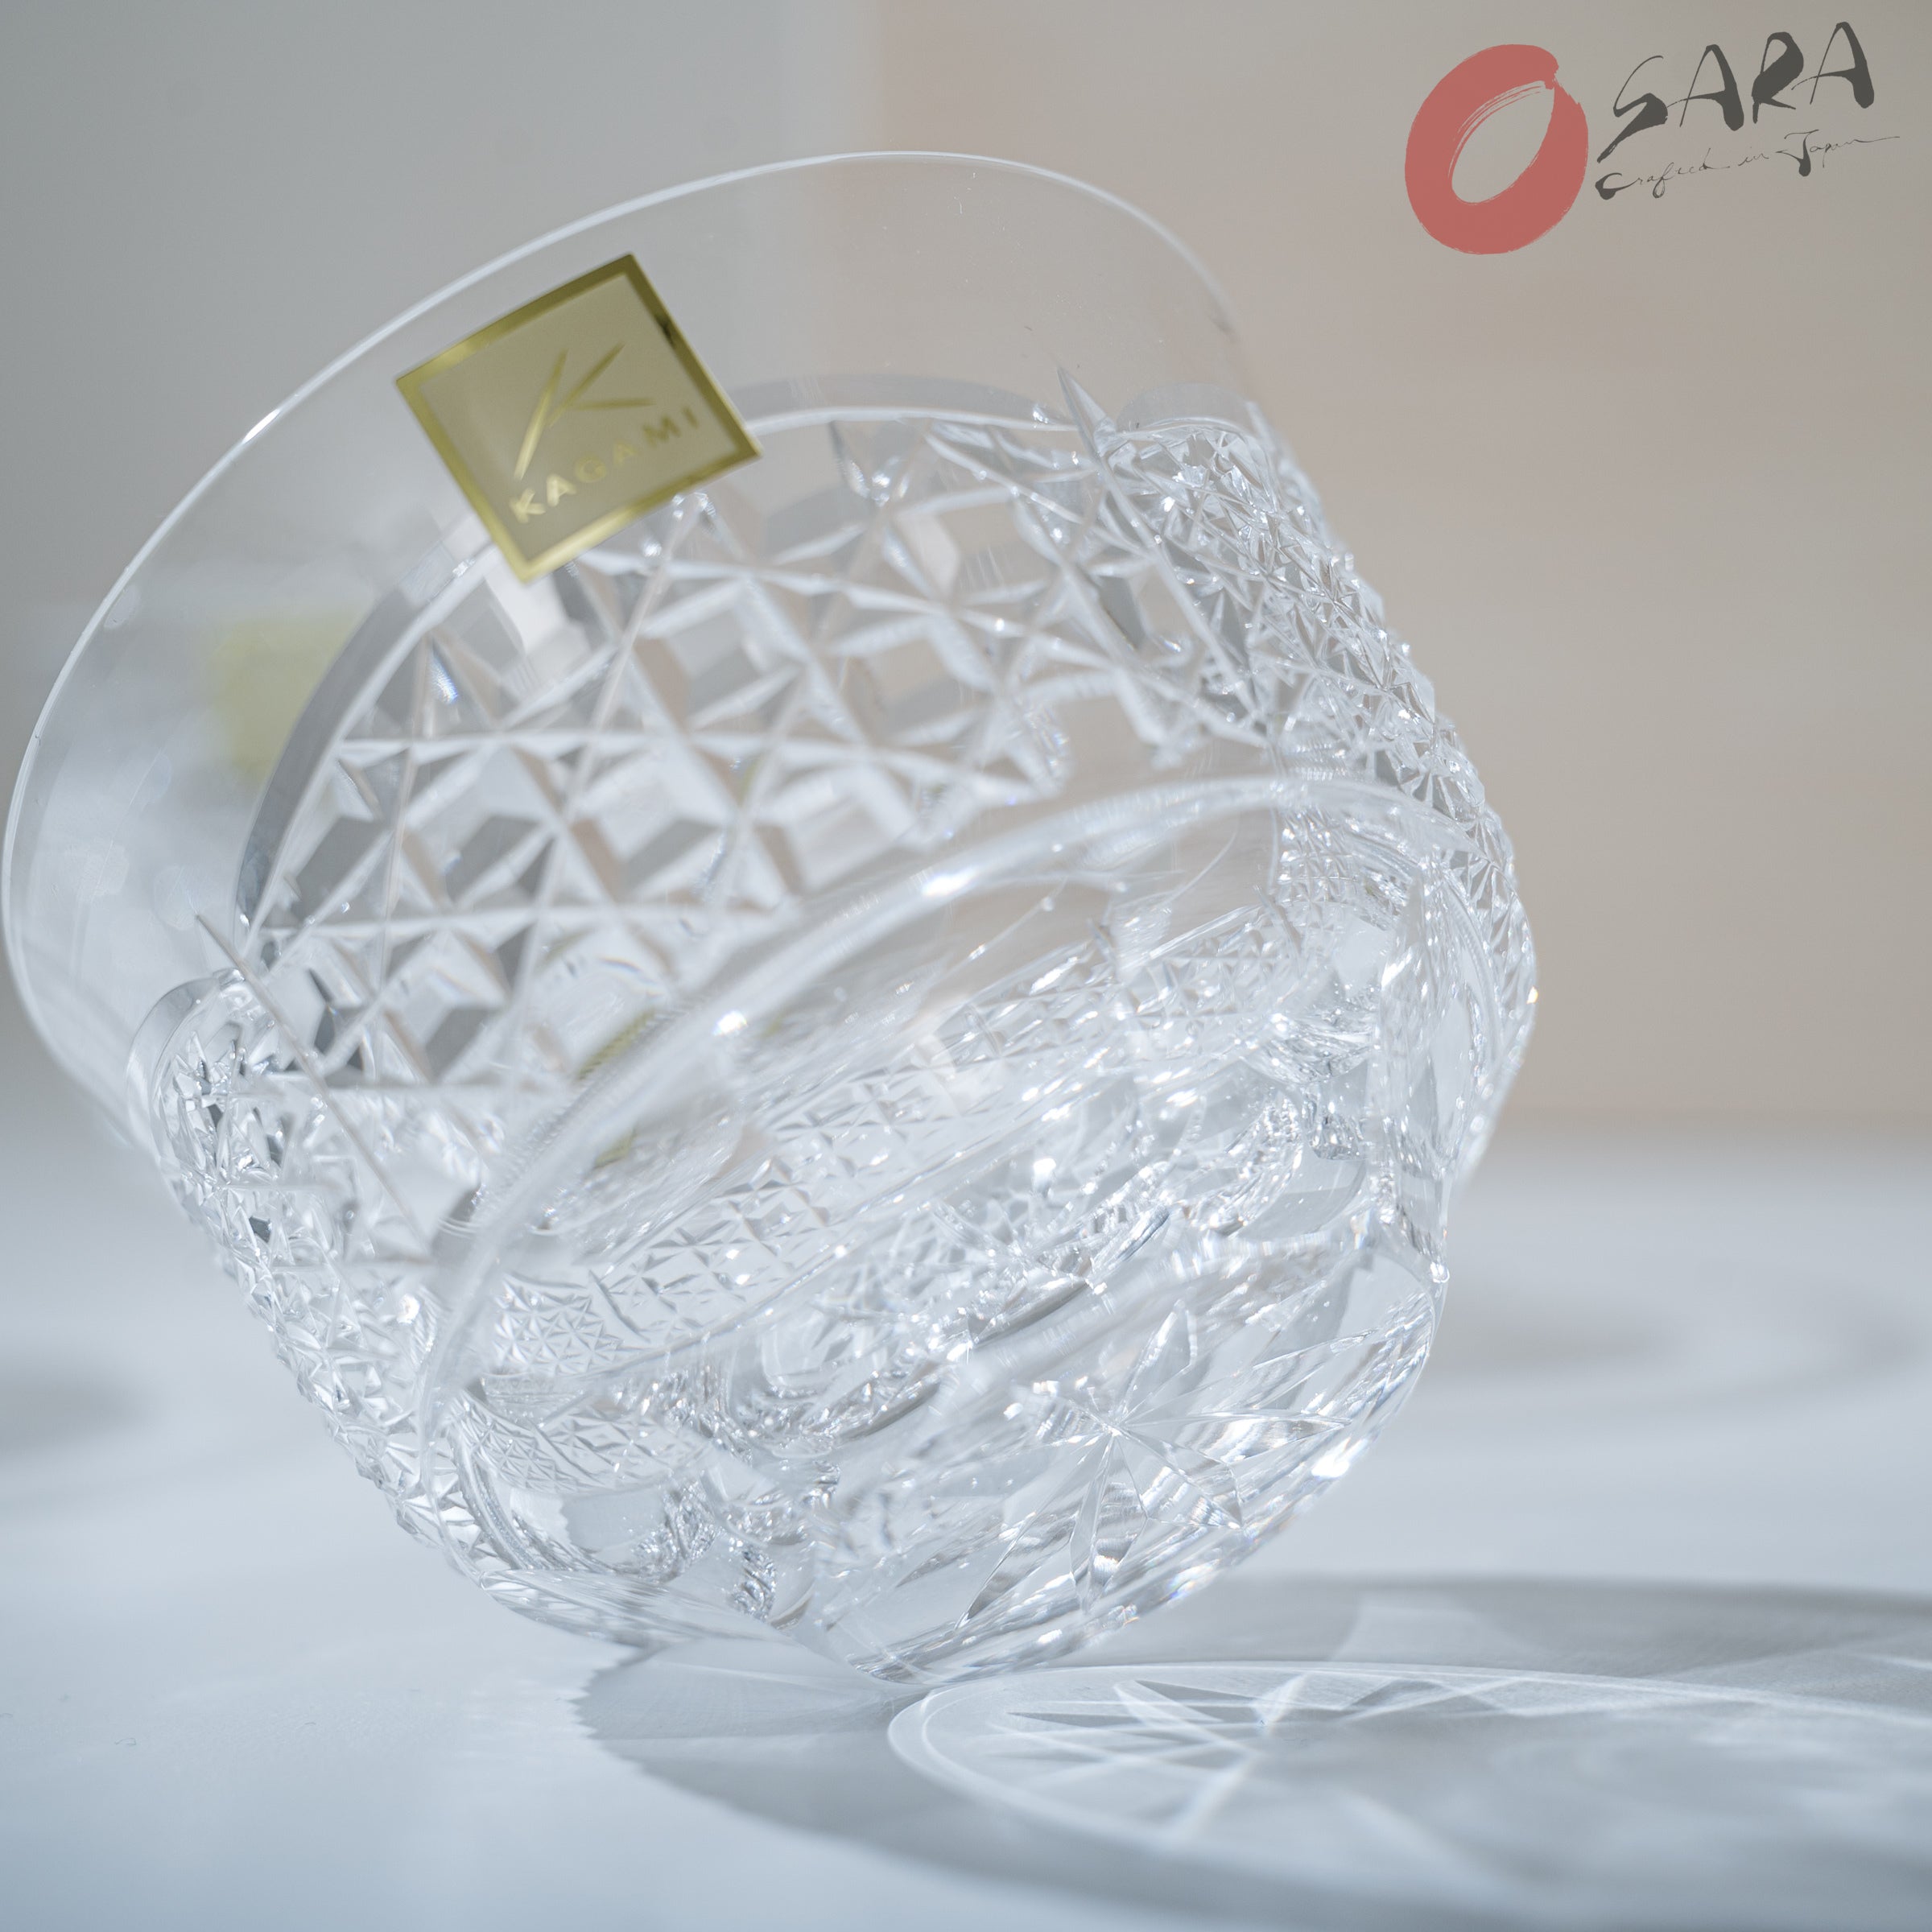 KAGAMI Crystal Edo-Kiriko Premium Cold Tea Cup - Set of 5 / 冷茶碗揃